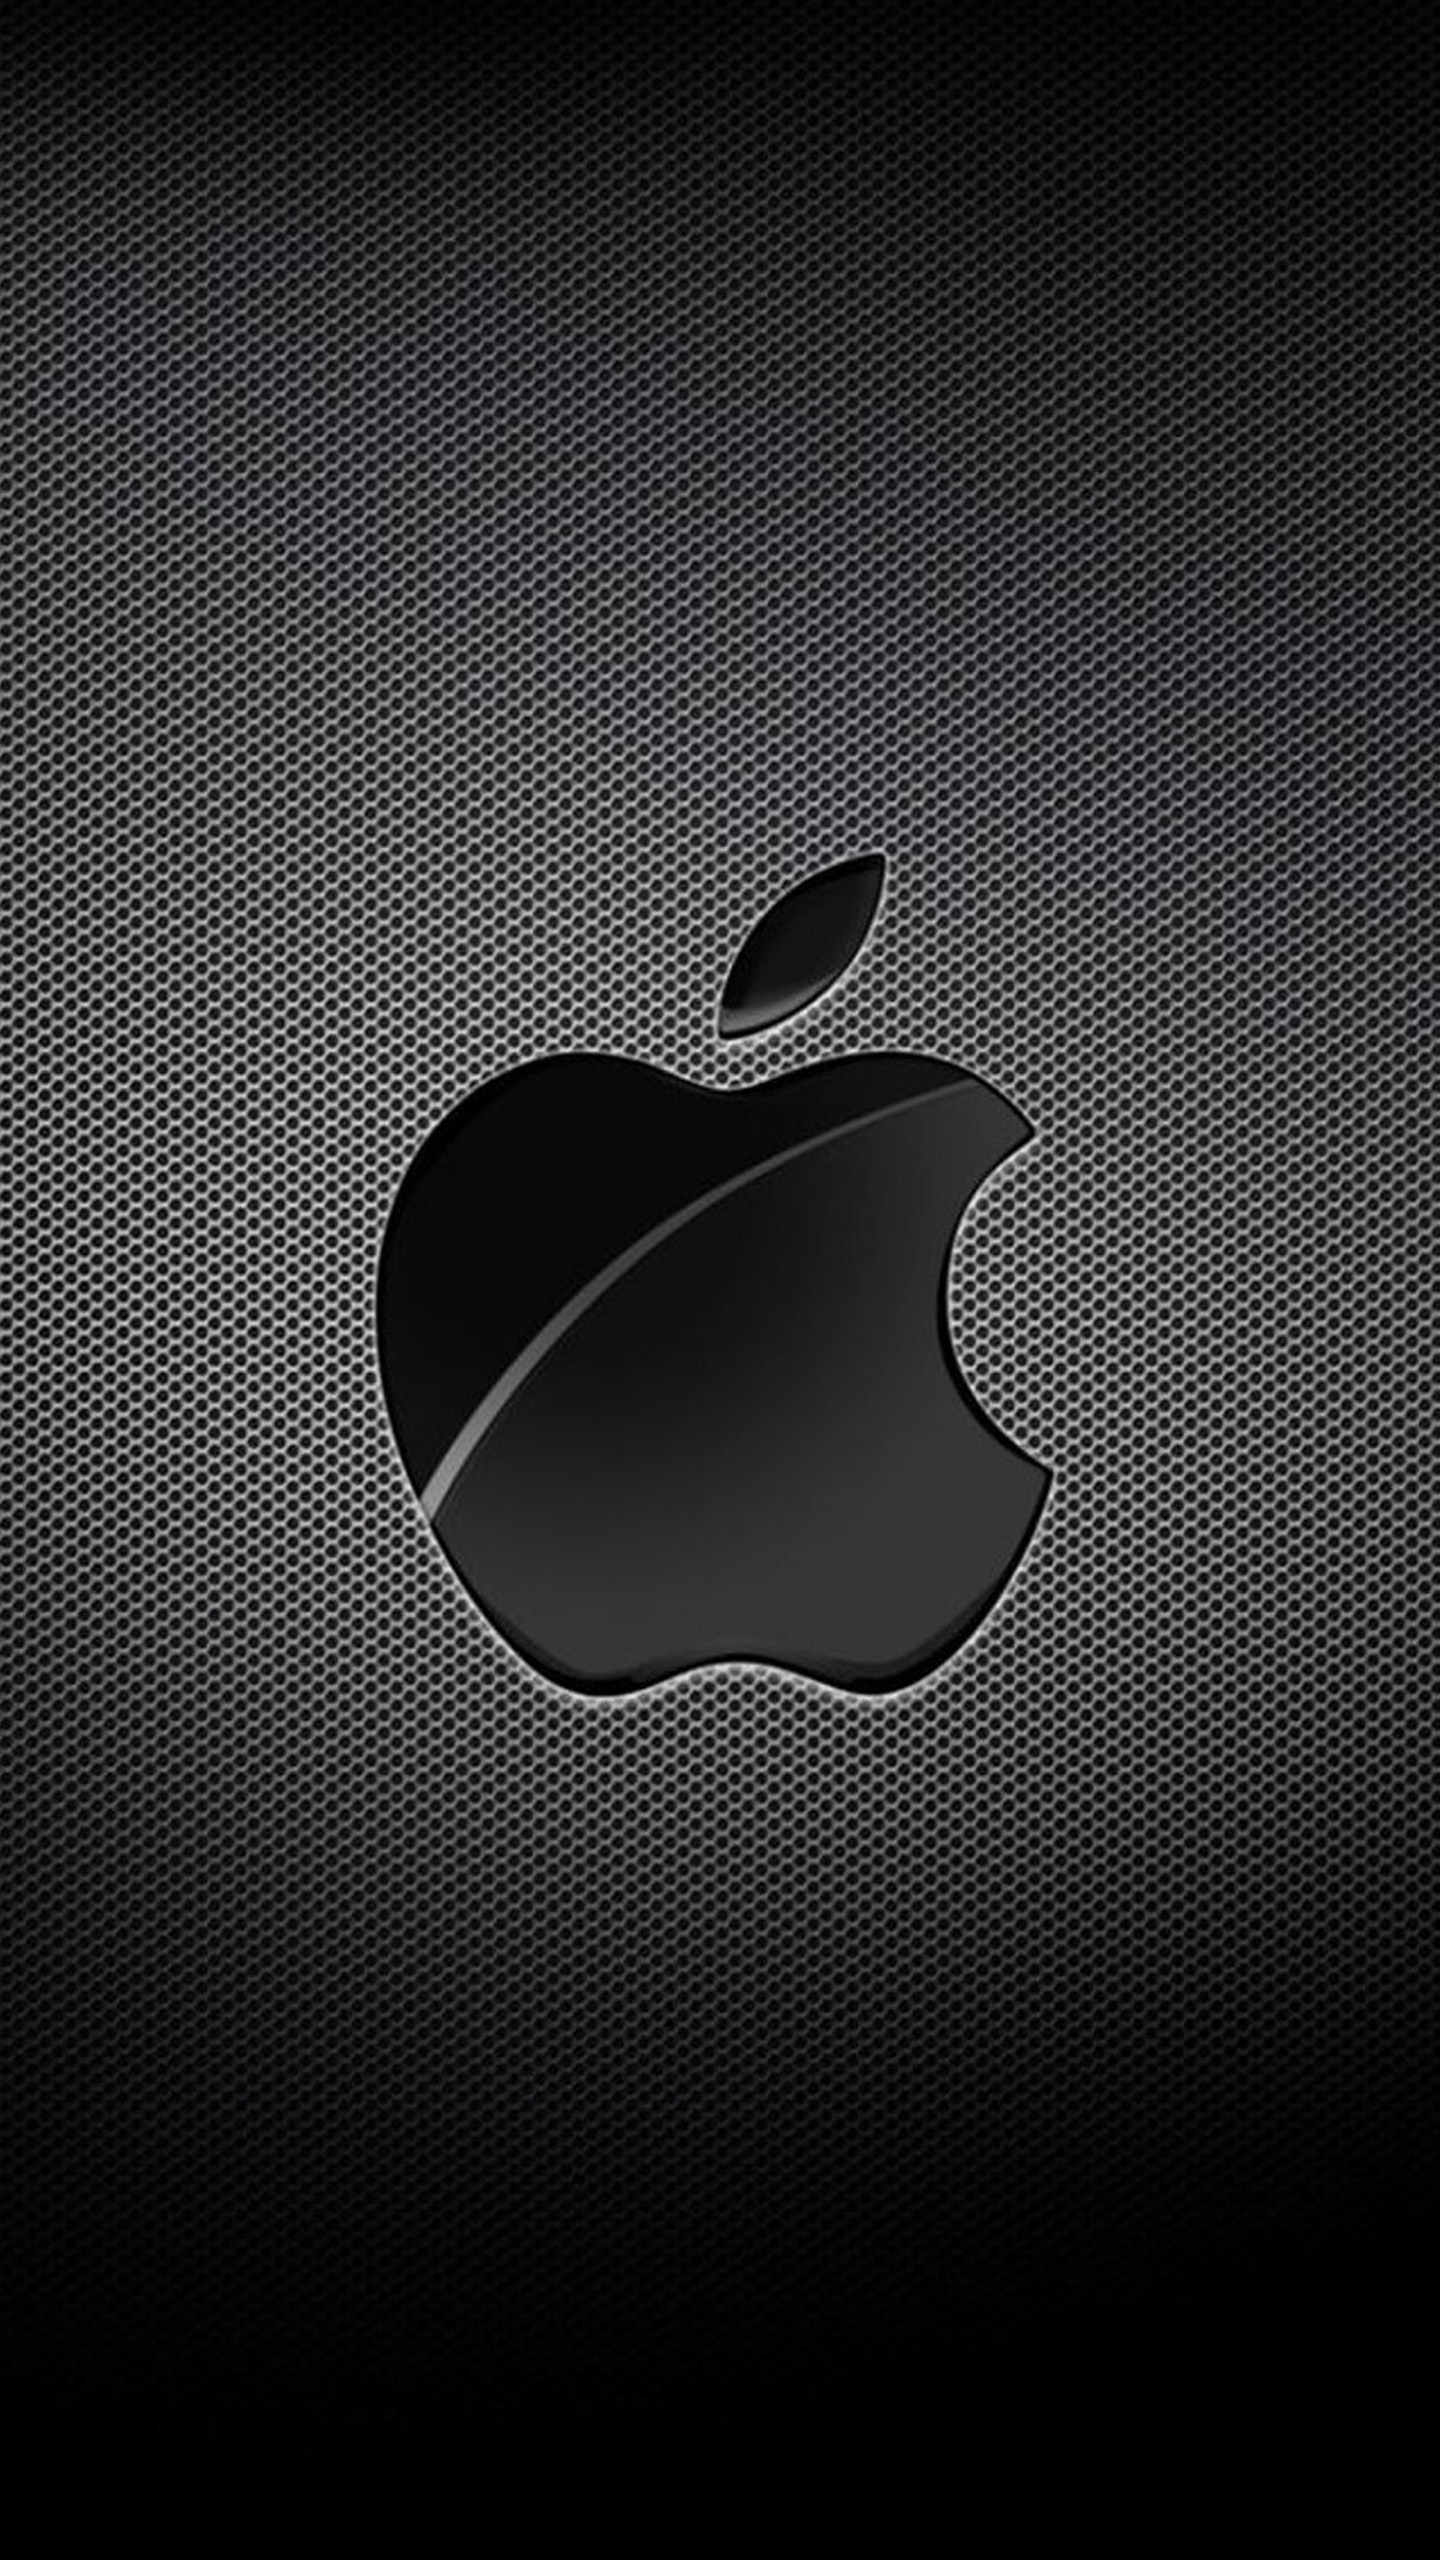 Black Apple logo 1 Galaxy S6 Wallpaper | Galaxy S6 Wallpapers